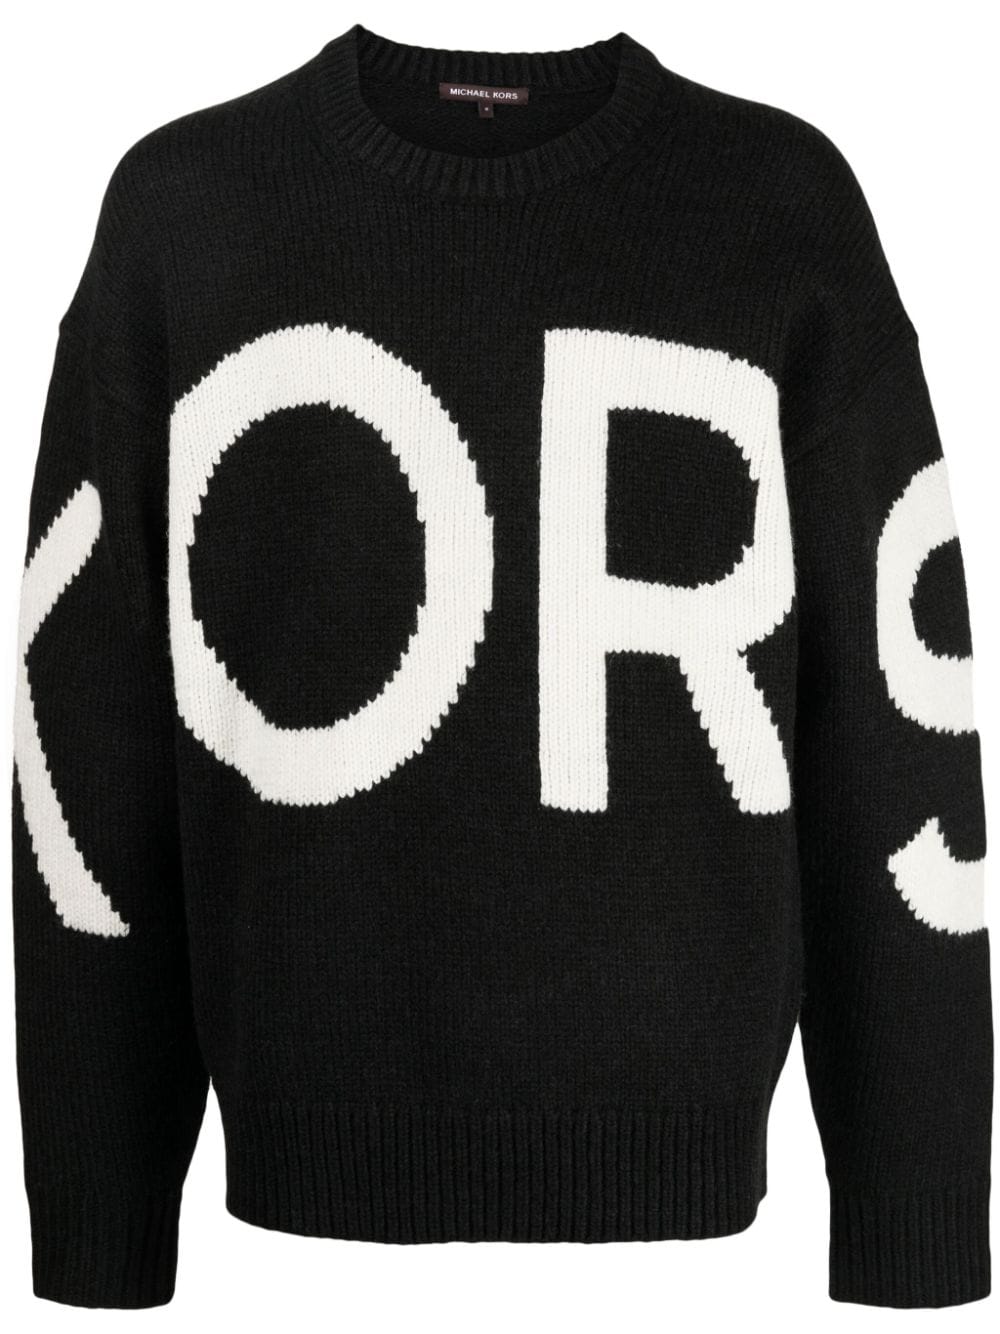 Michael Kors Kors Knit Jumper In Black